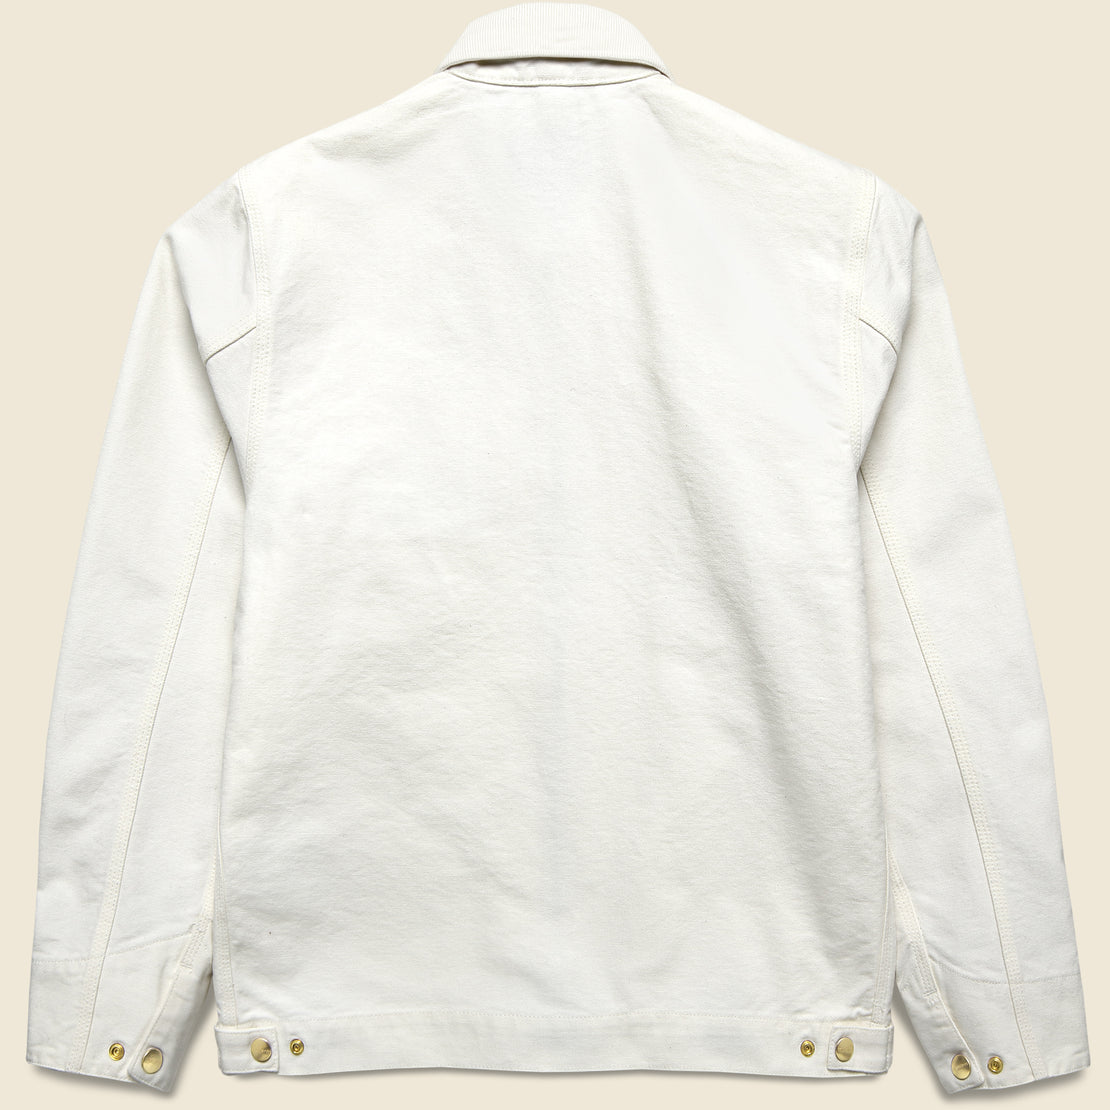 Detroit Jacket - Wax/Wax - Carhartt WIP - STAG Provisions - Outerwear - Coat / Jacket